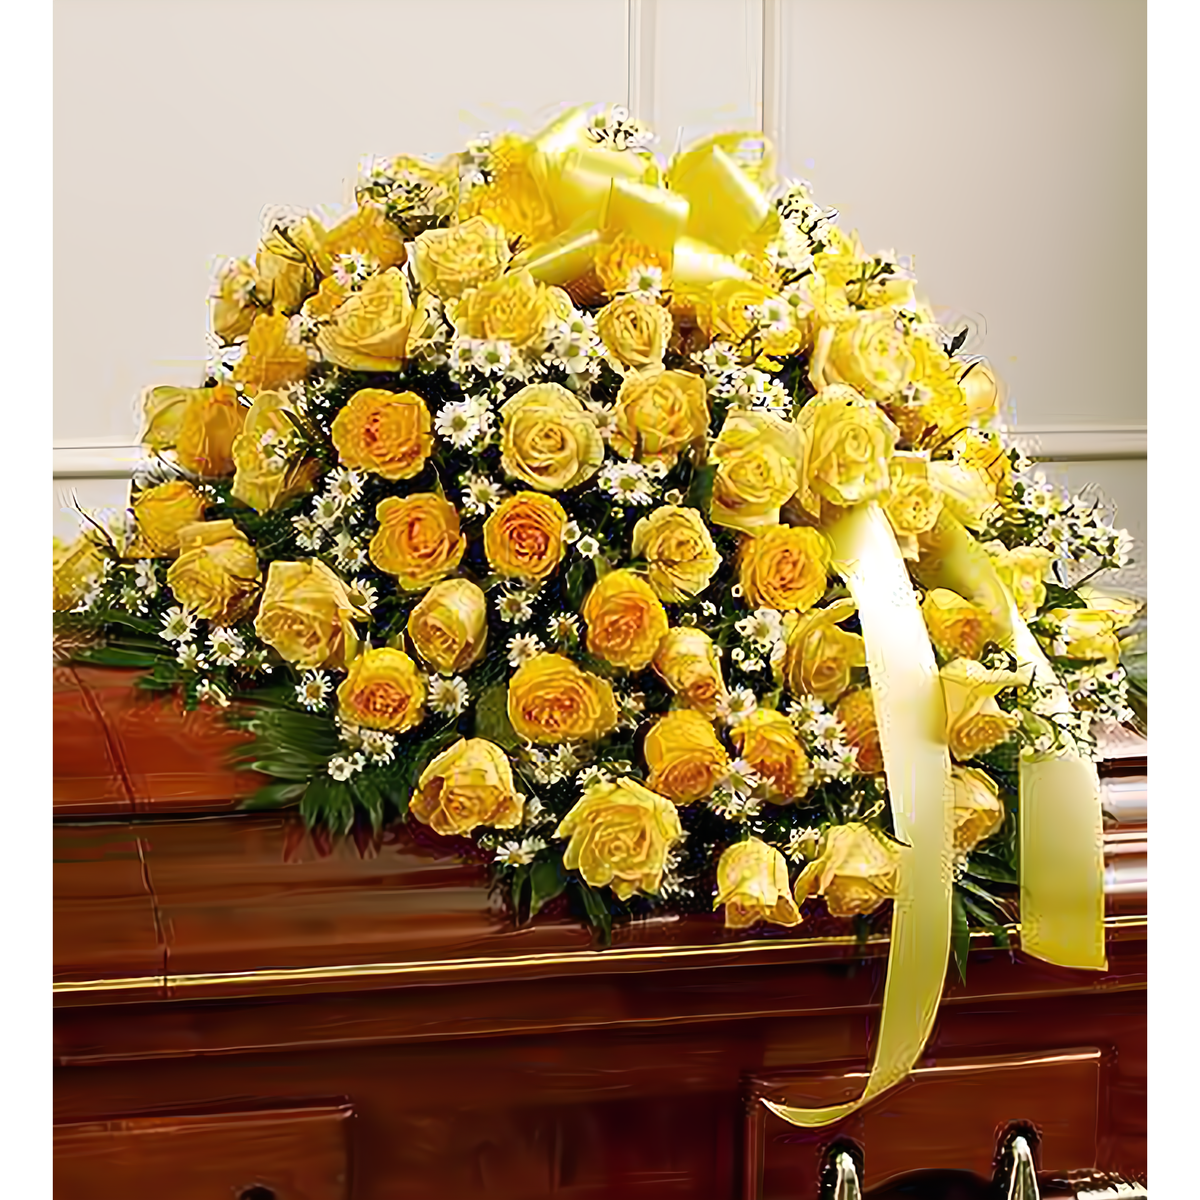 Cherished Memories Rose Half Casket Cover - Yellow - Funeral &gt; Casket Sprays